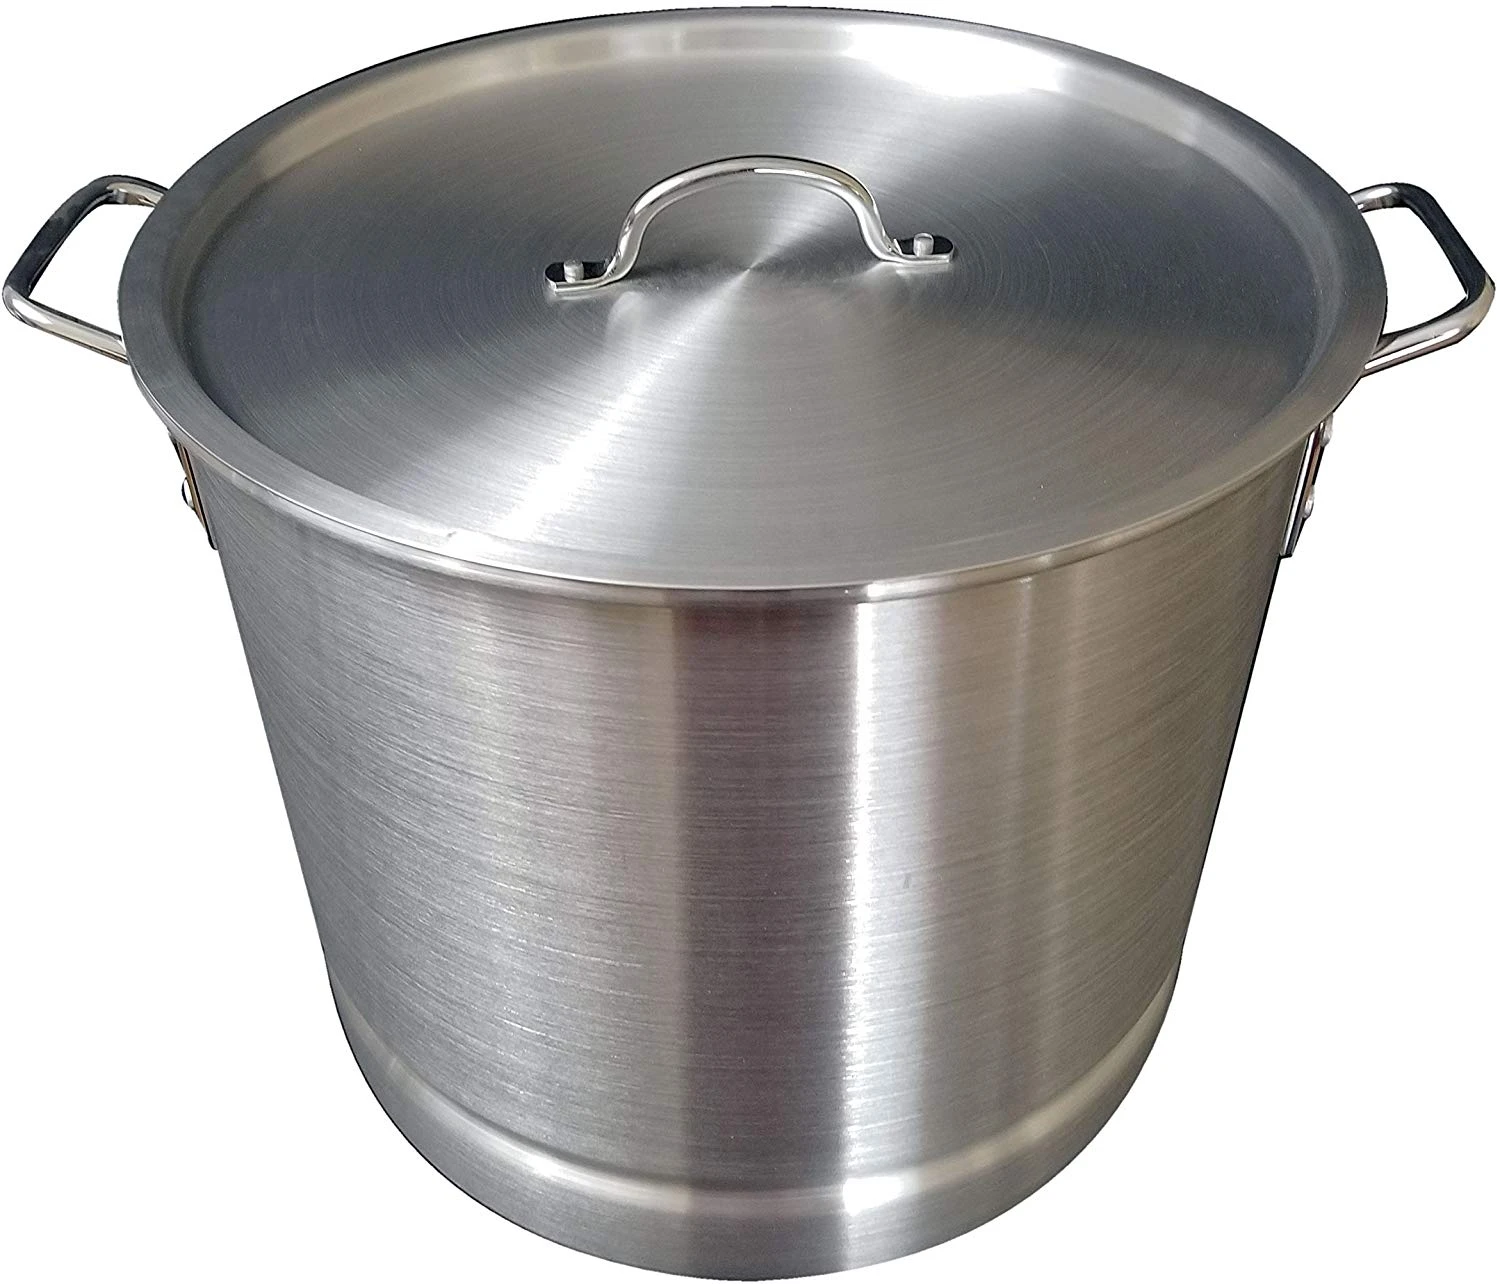 All Kinds Of Size Amazon new Aluminum 12-Quart Silver Pot Stock Pot Tamale and Steamer Aluminum Stock Pot